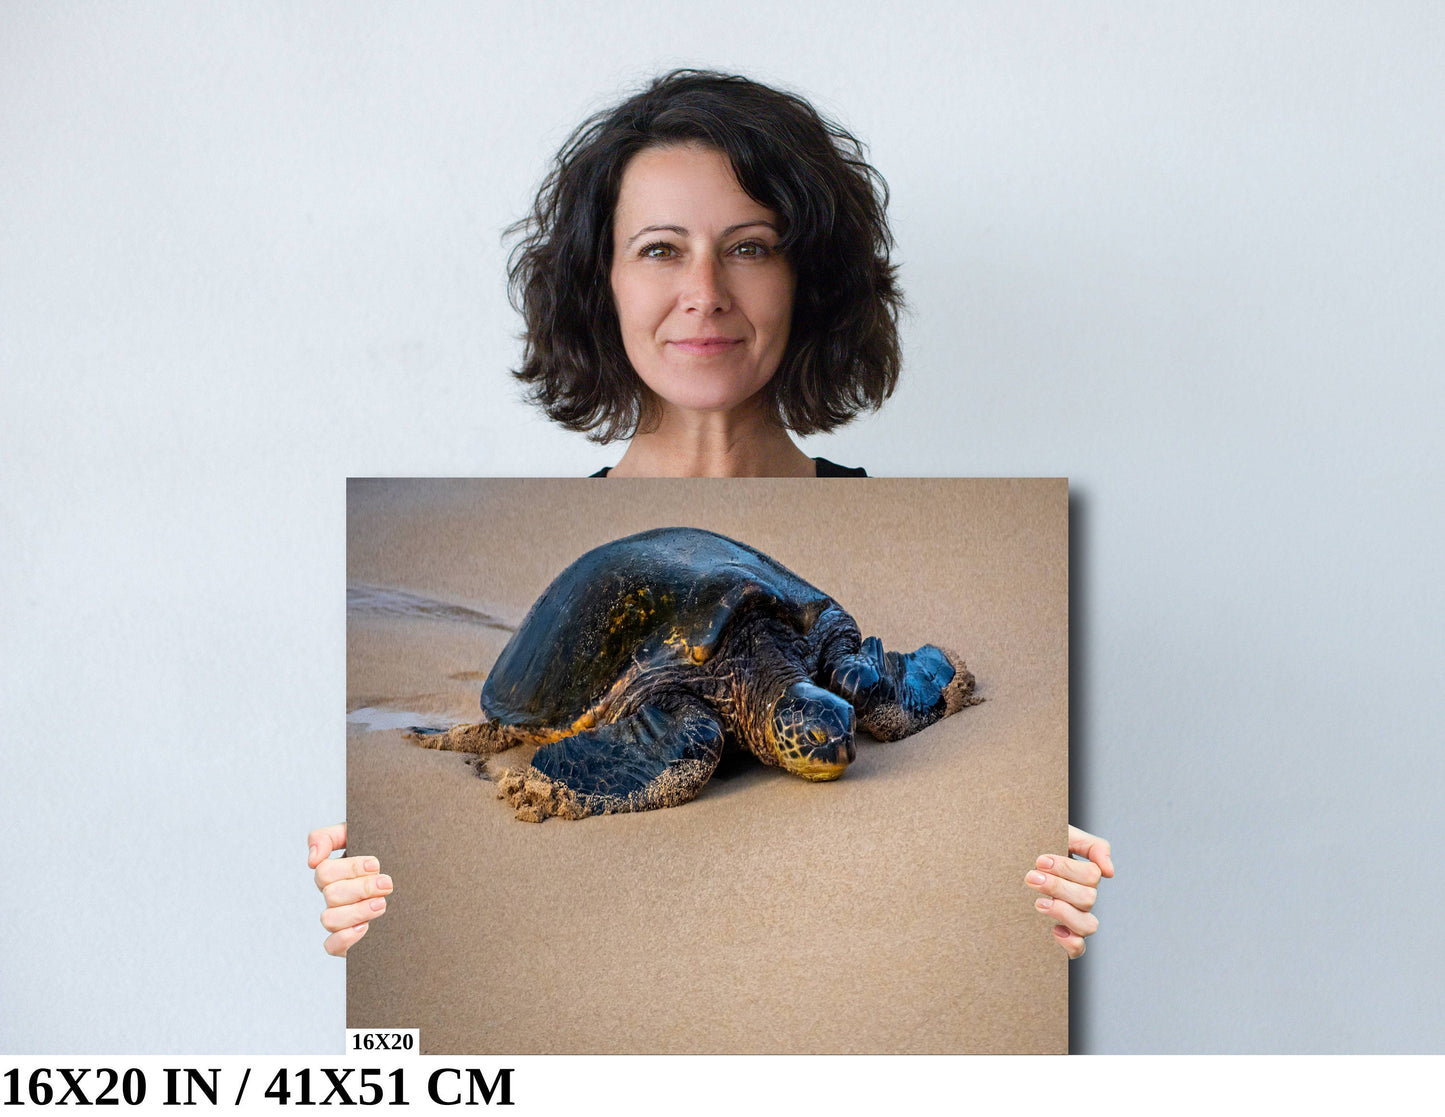 Turtle Serenity: Maui Hawaii Sea Turtle Photography Wall Art Ocean Wildlife Canvas Print